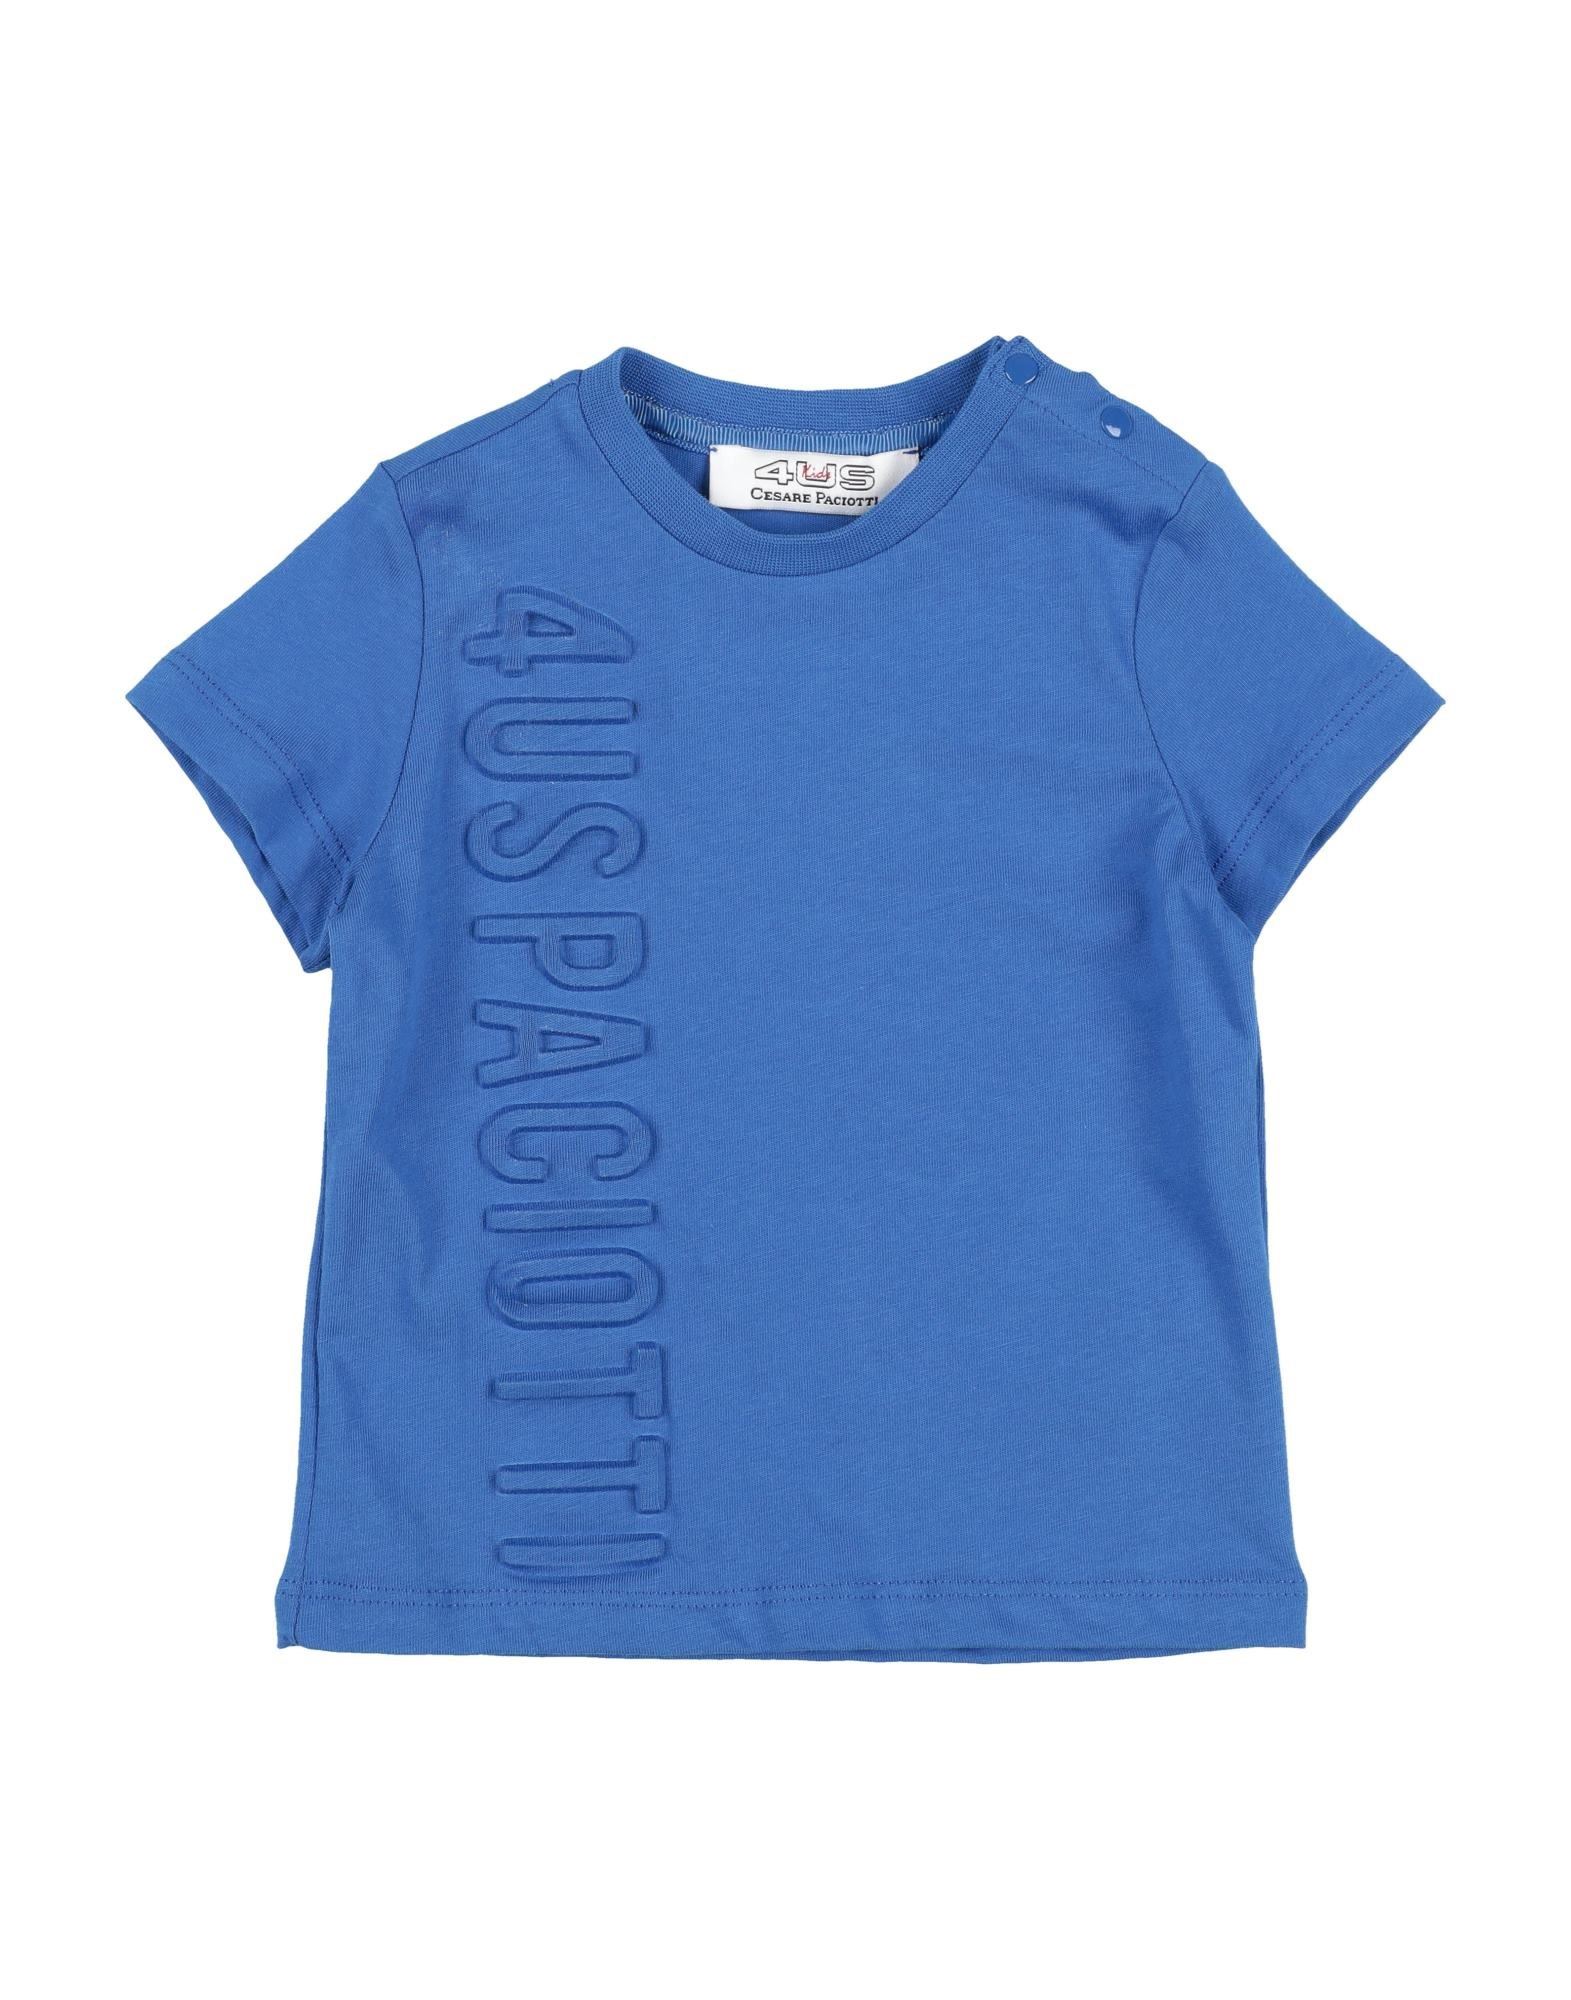 CESARE PACIOTTI 4US T-shirts Kinder Blau von CESARE PACIOTTI 4US